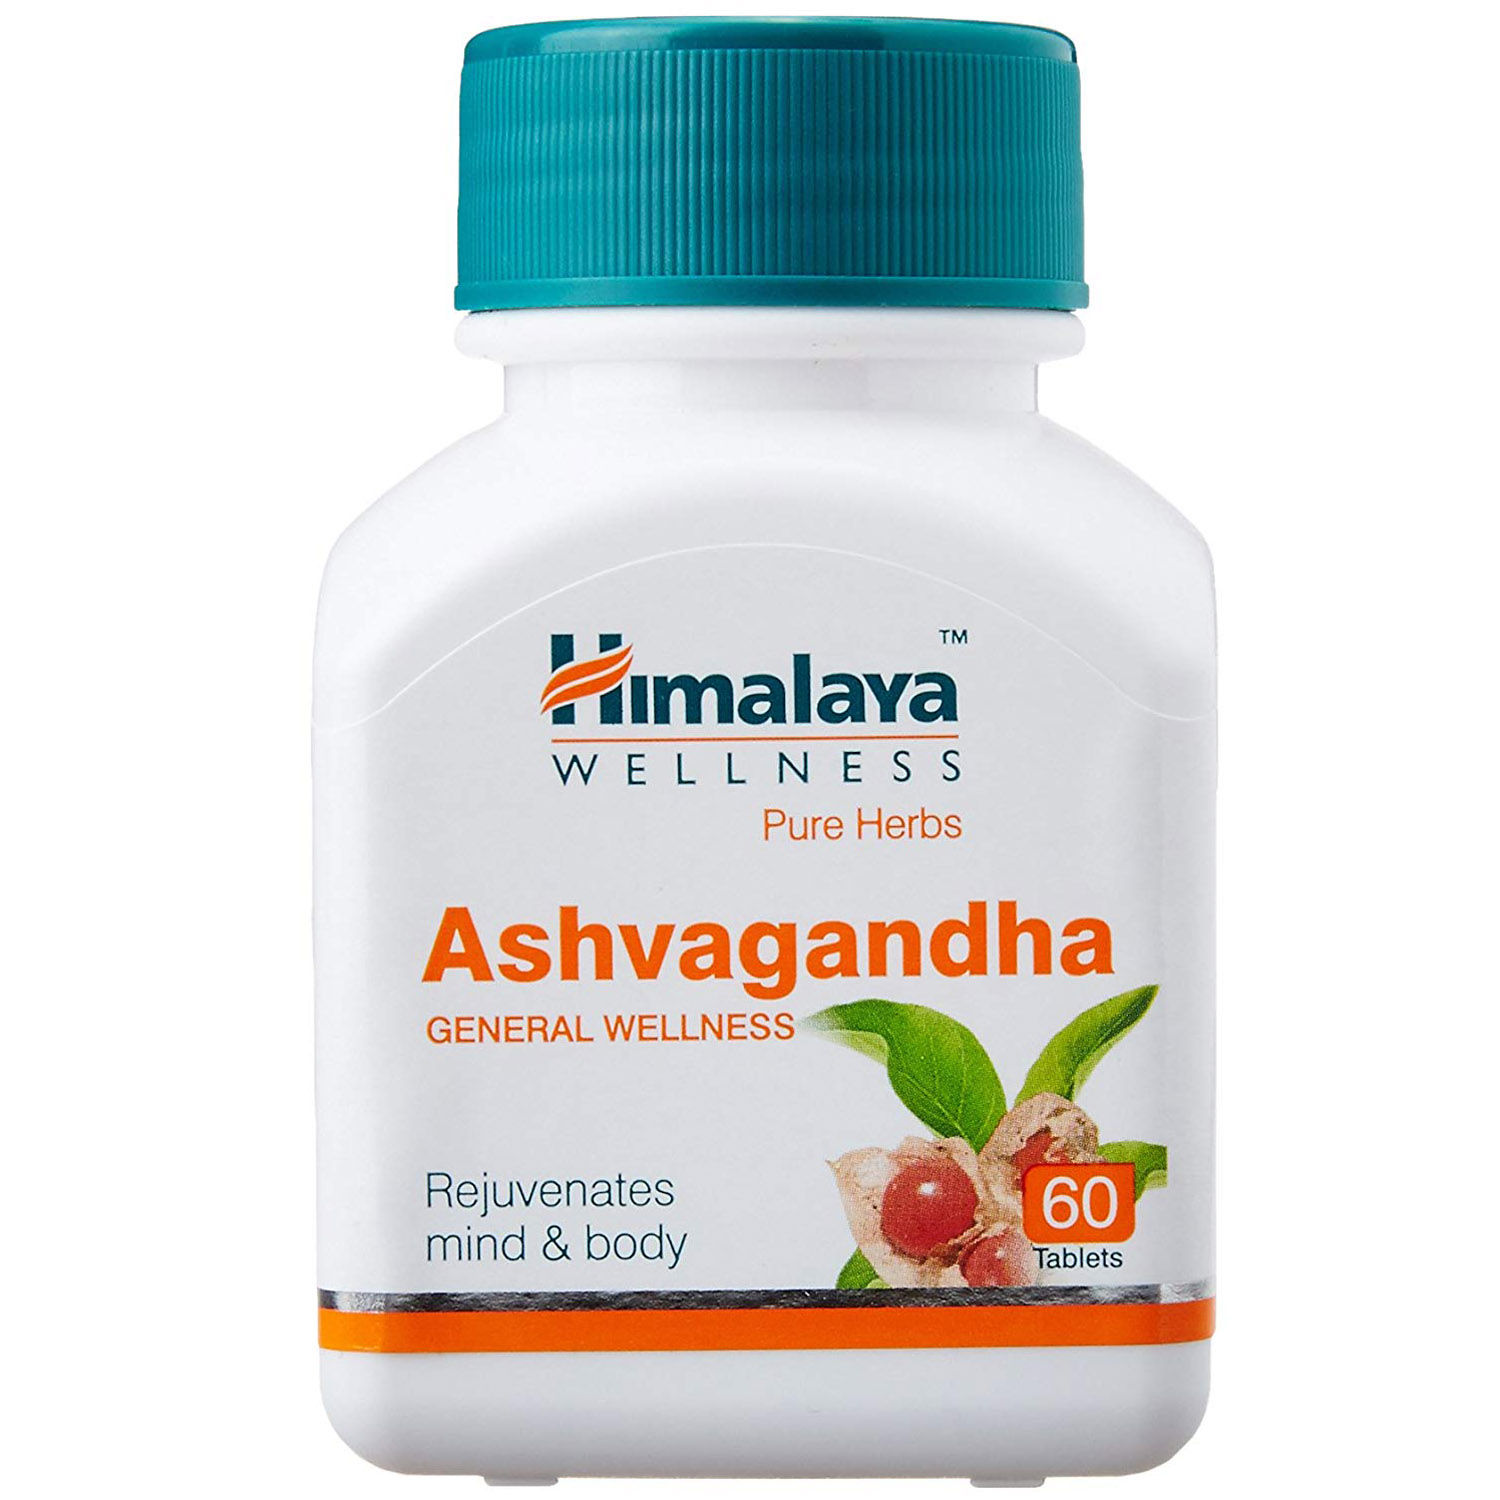 Himalaya Ashvagandha General Wellness, 60 Tablets, Pack of 1 